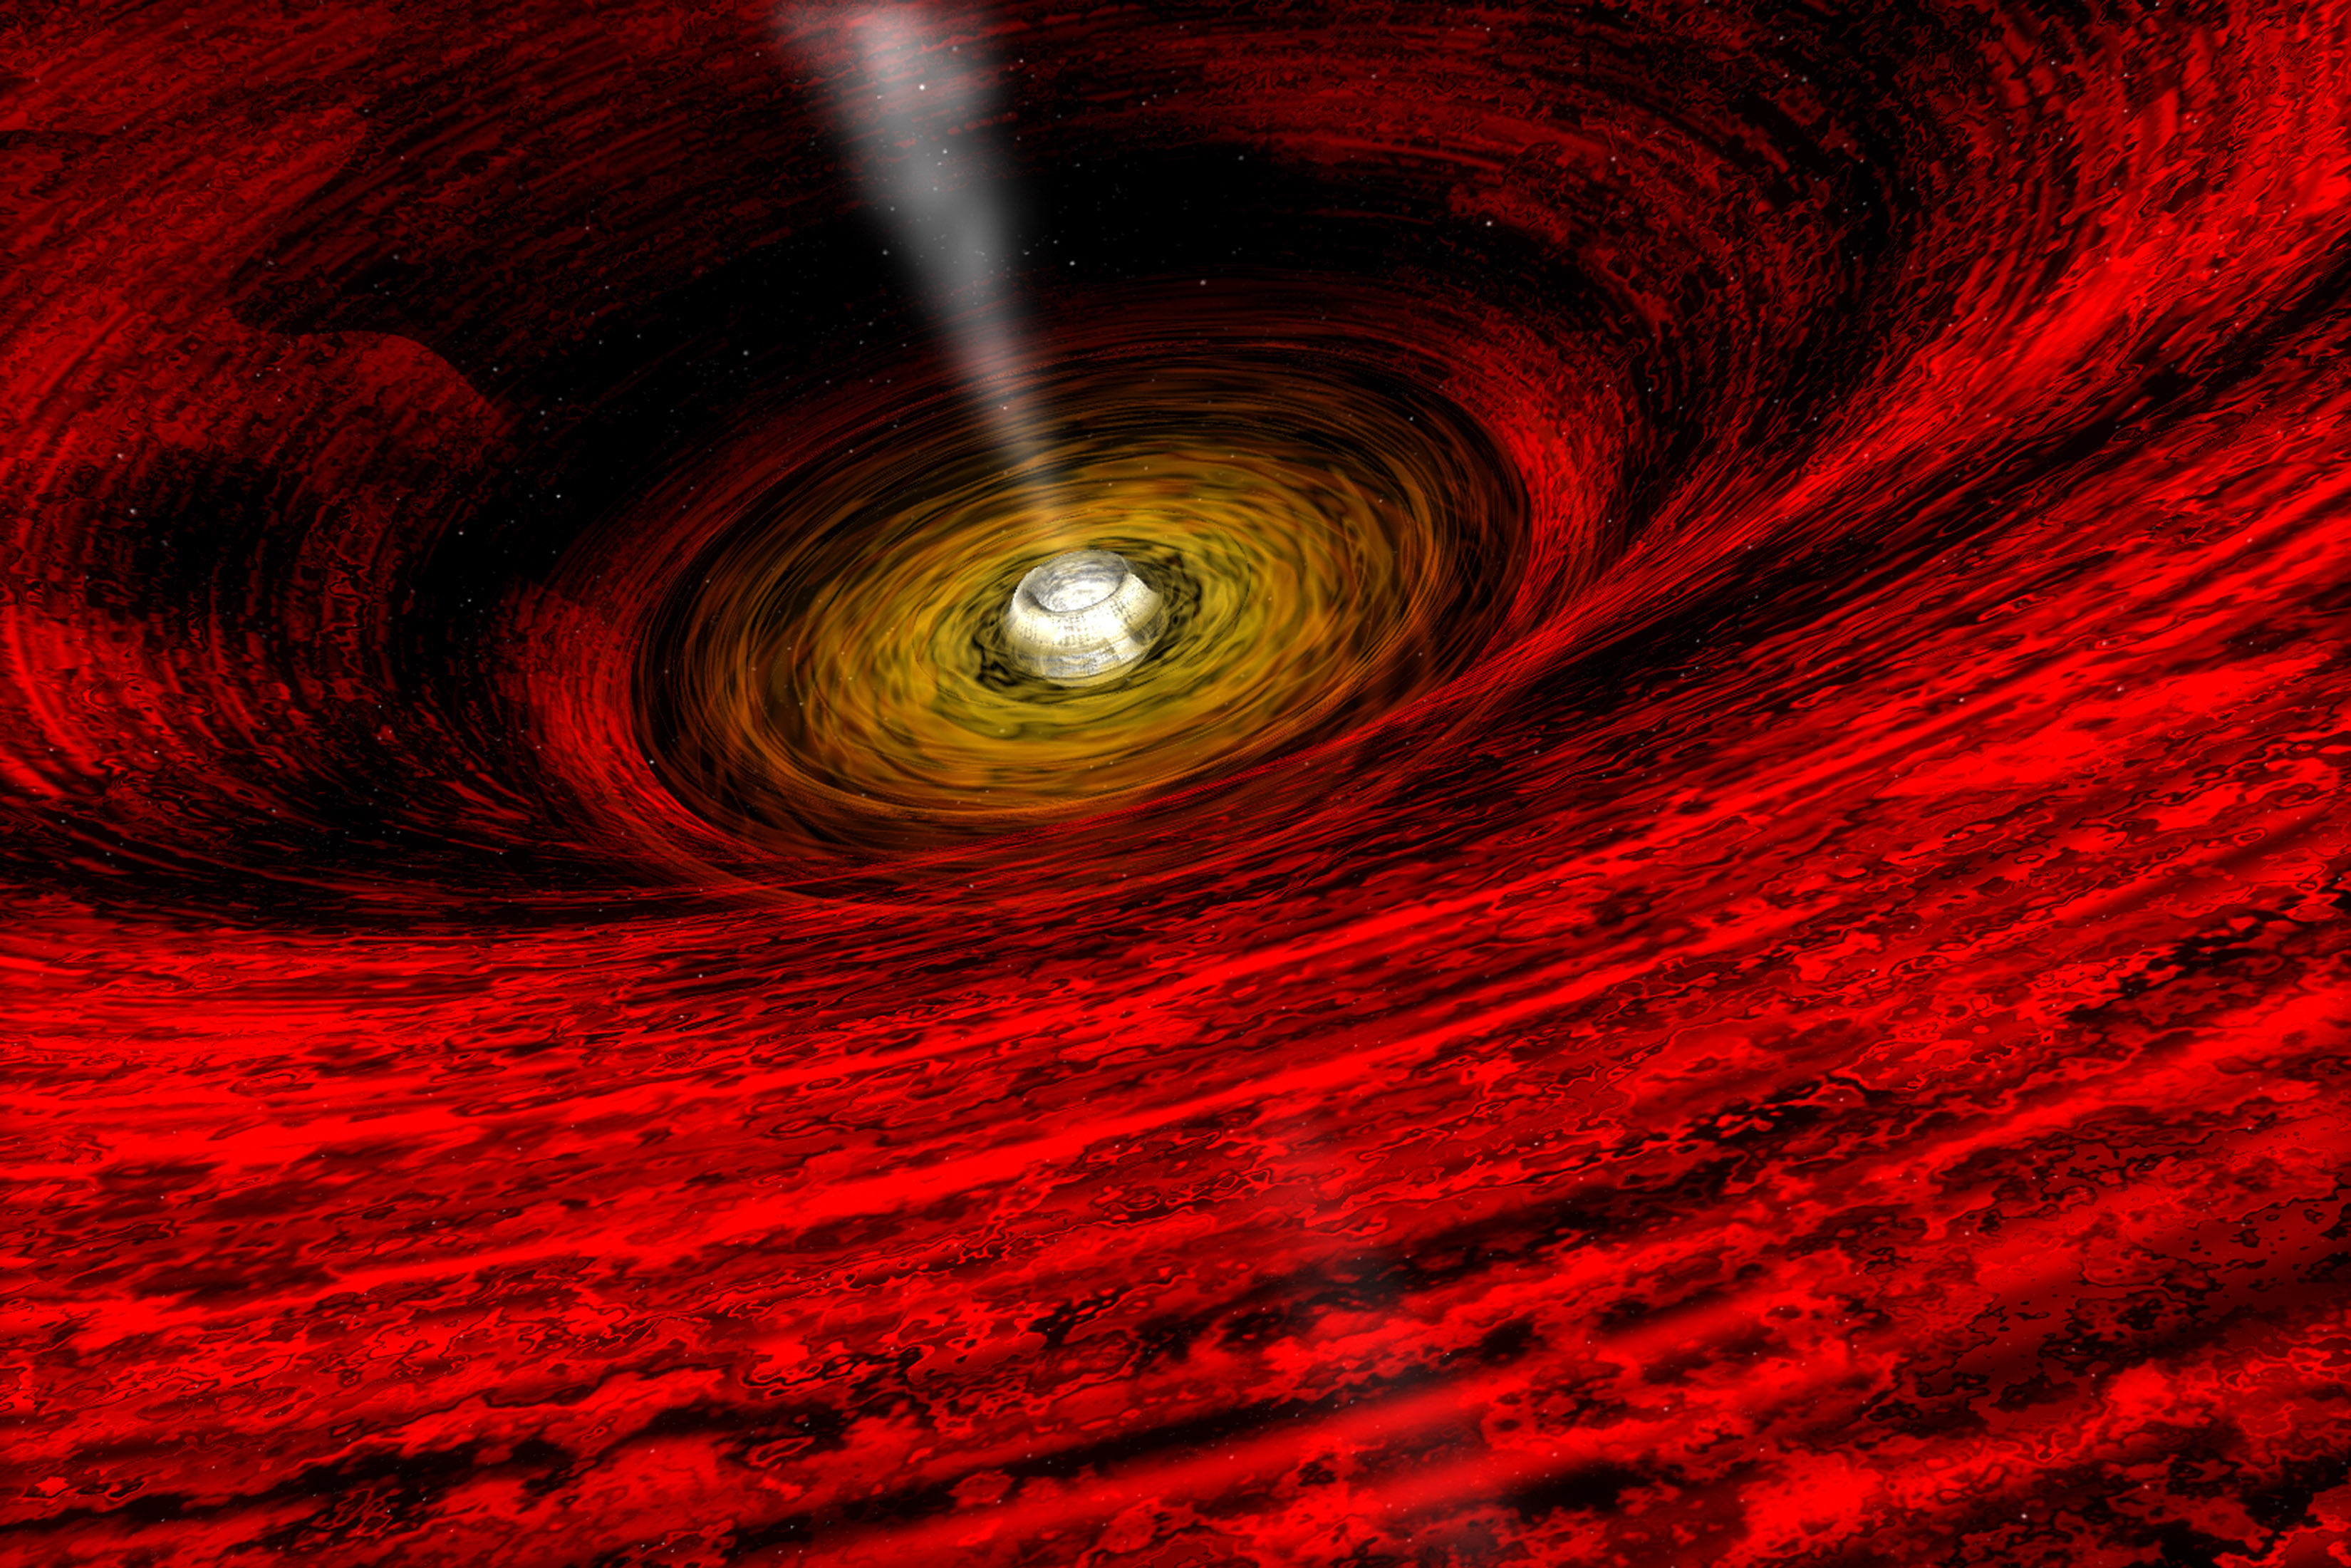 APOD: 2009 April 19 - The View Near a Black Hole